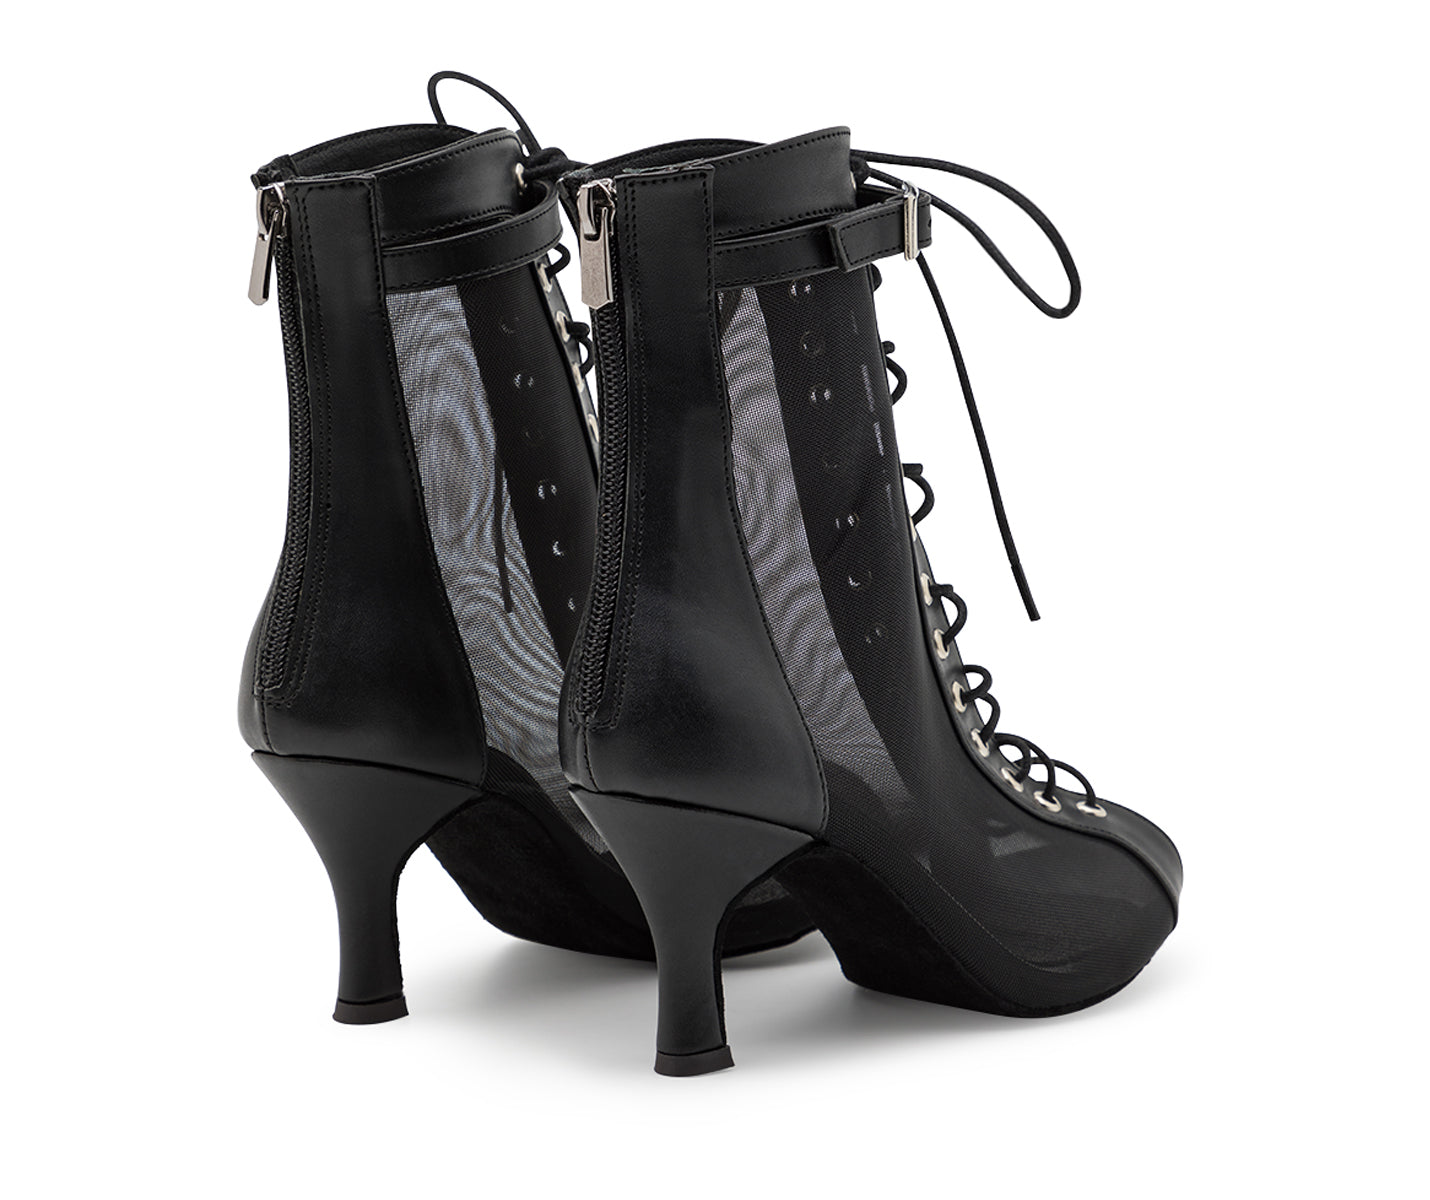 Chaussures de danse Tarff en noir